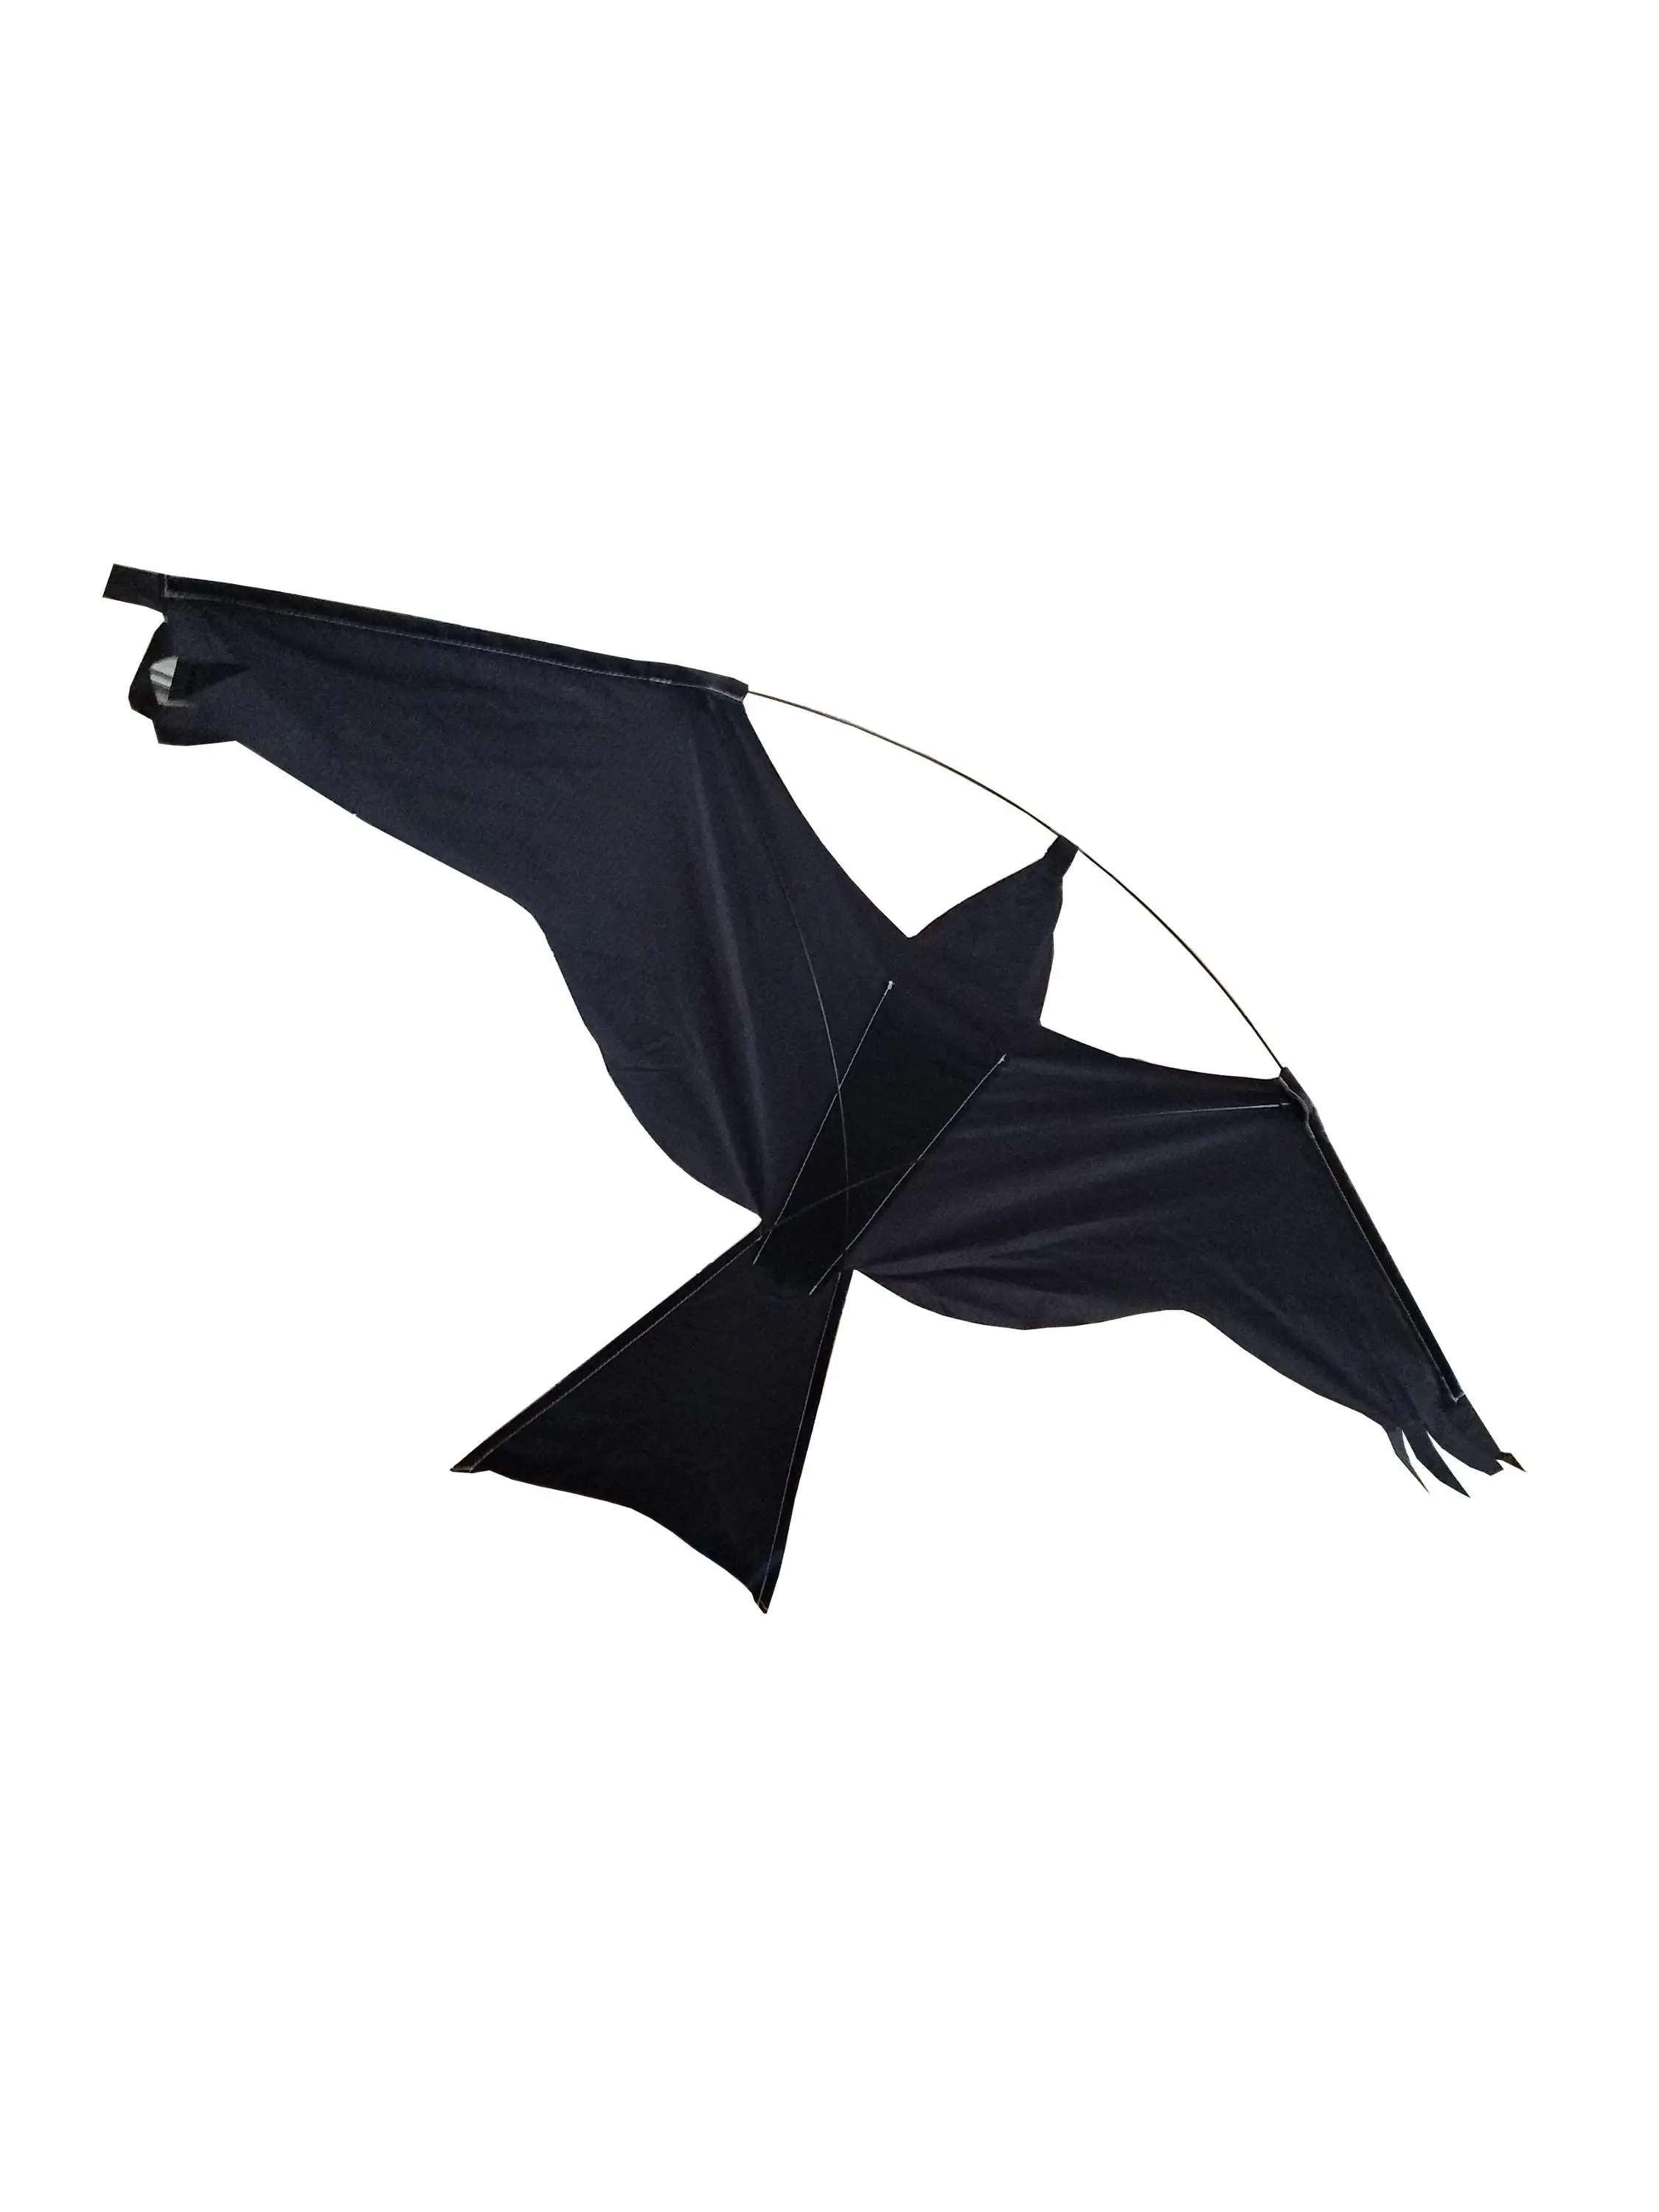 a bird kite